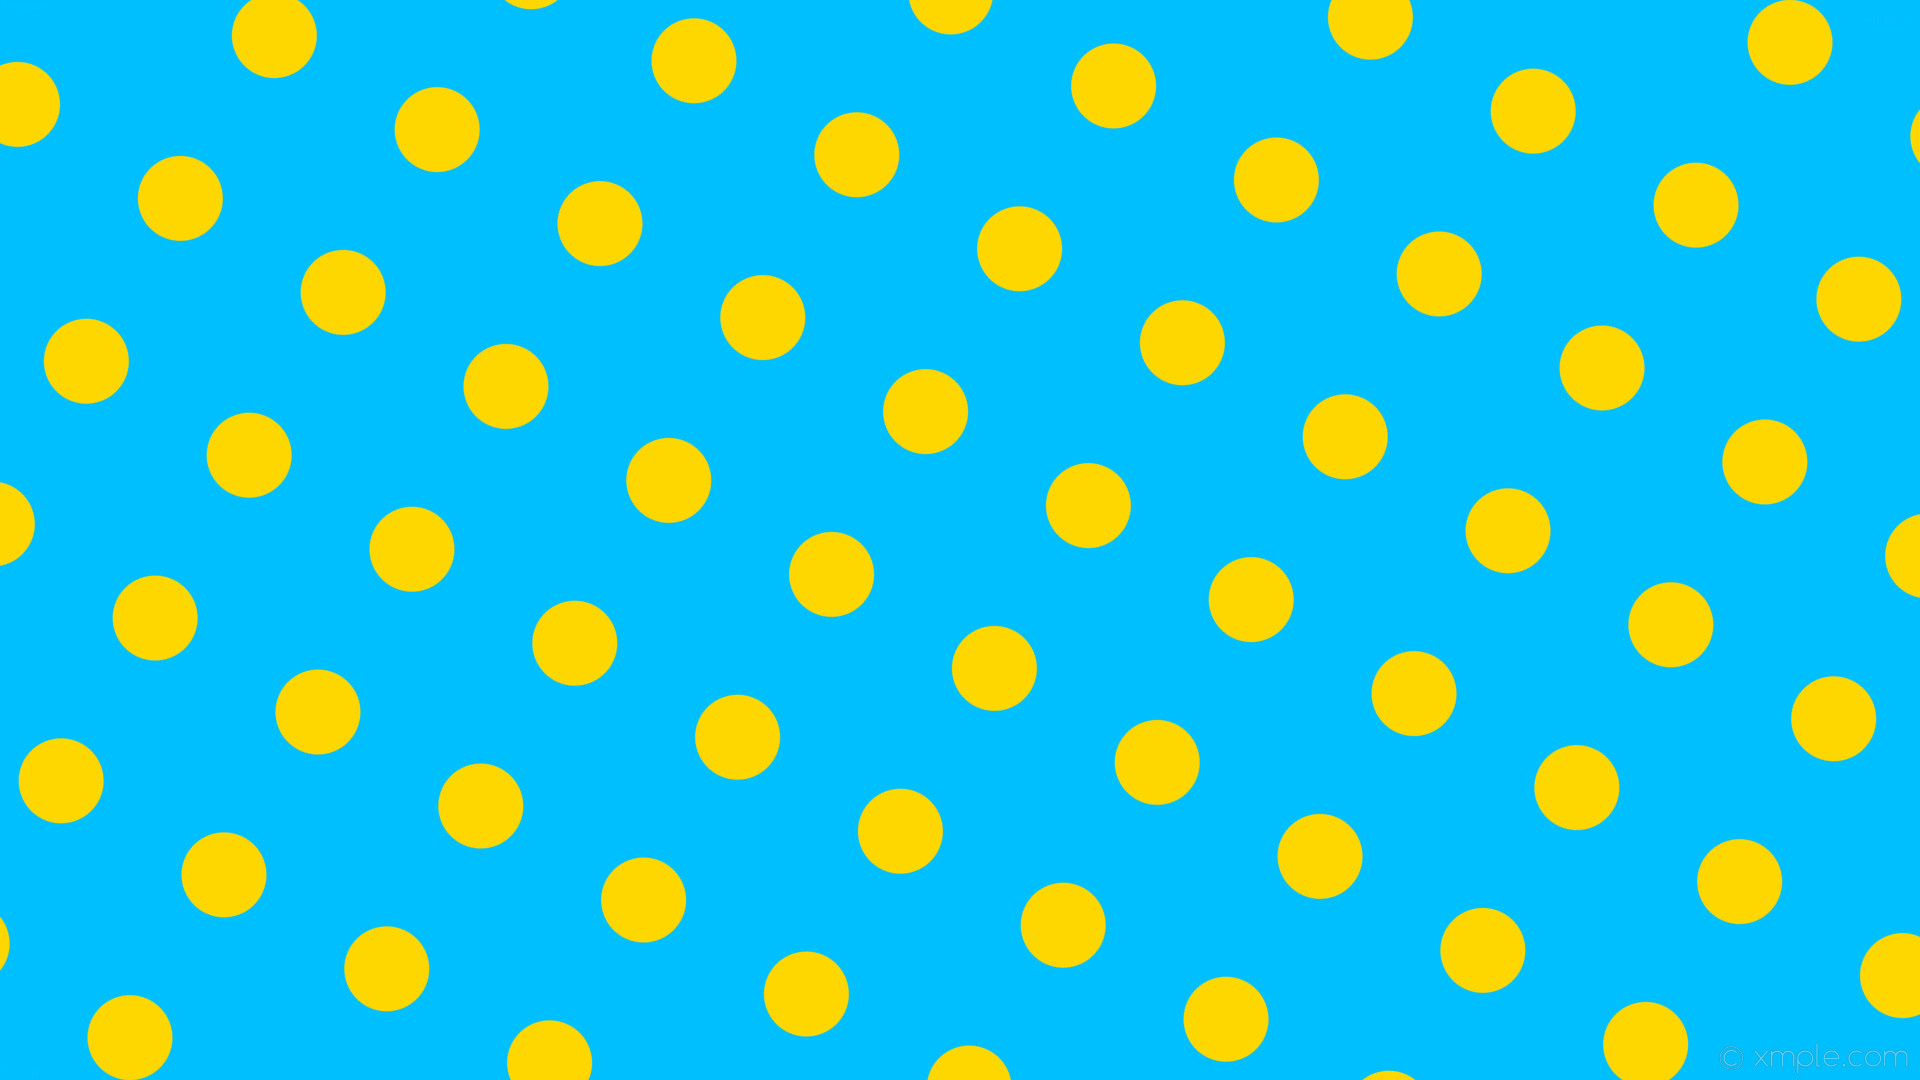 1920x1080 wallpaper spots blue yellow polka dots deep sky blue gold #00bfff #ffd700  240Â°